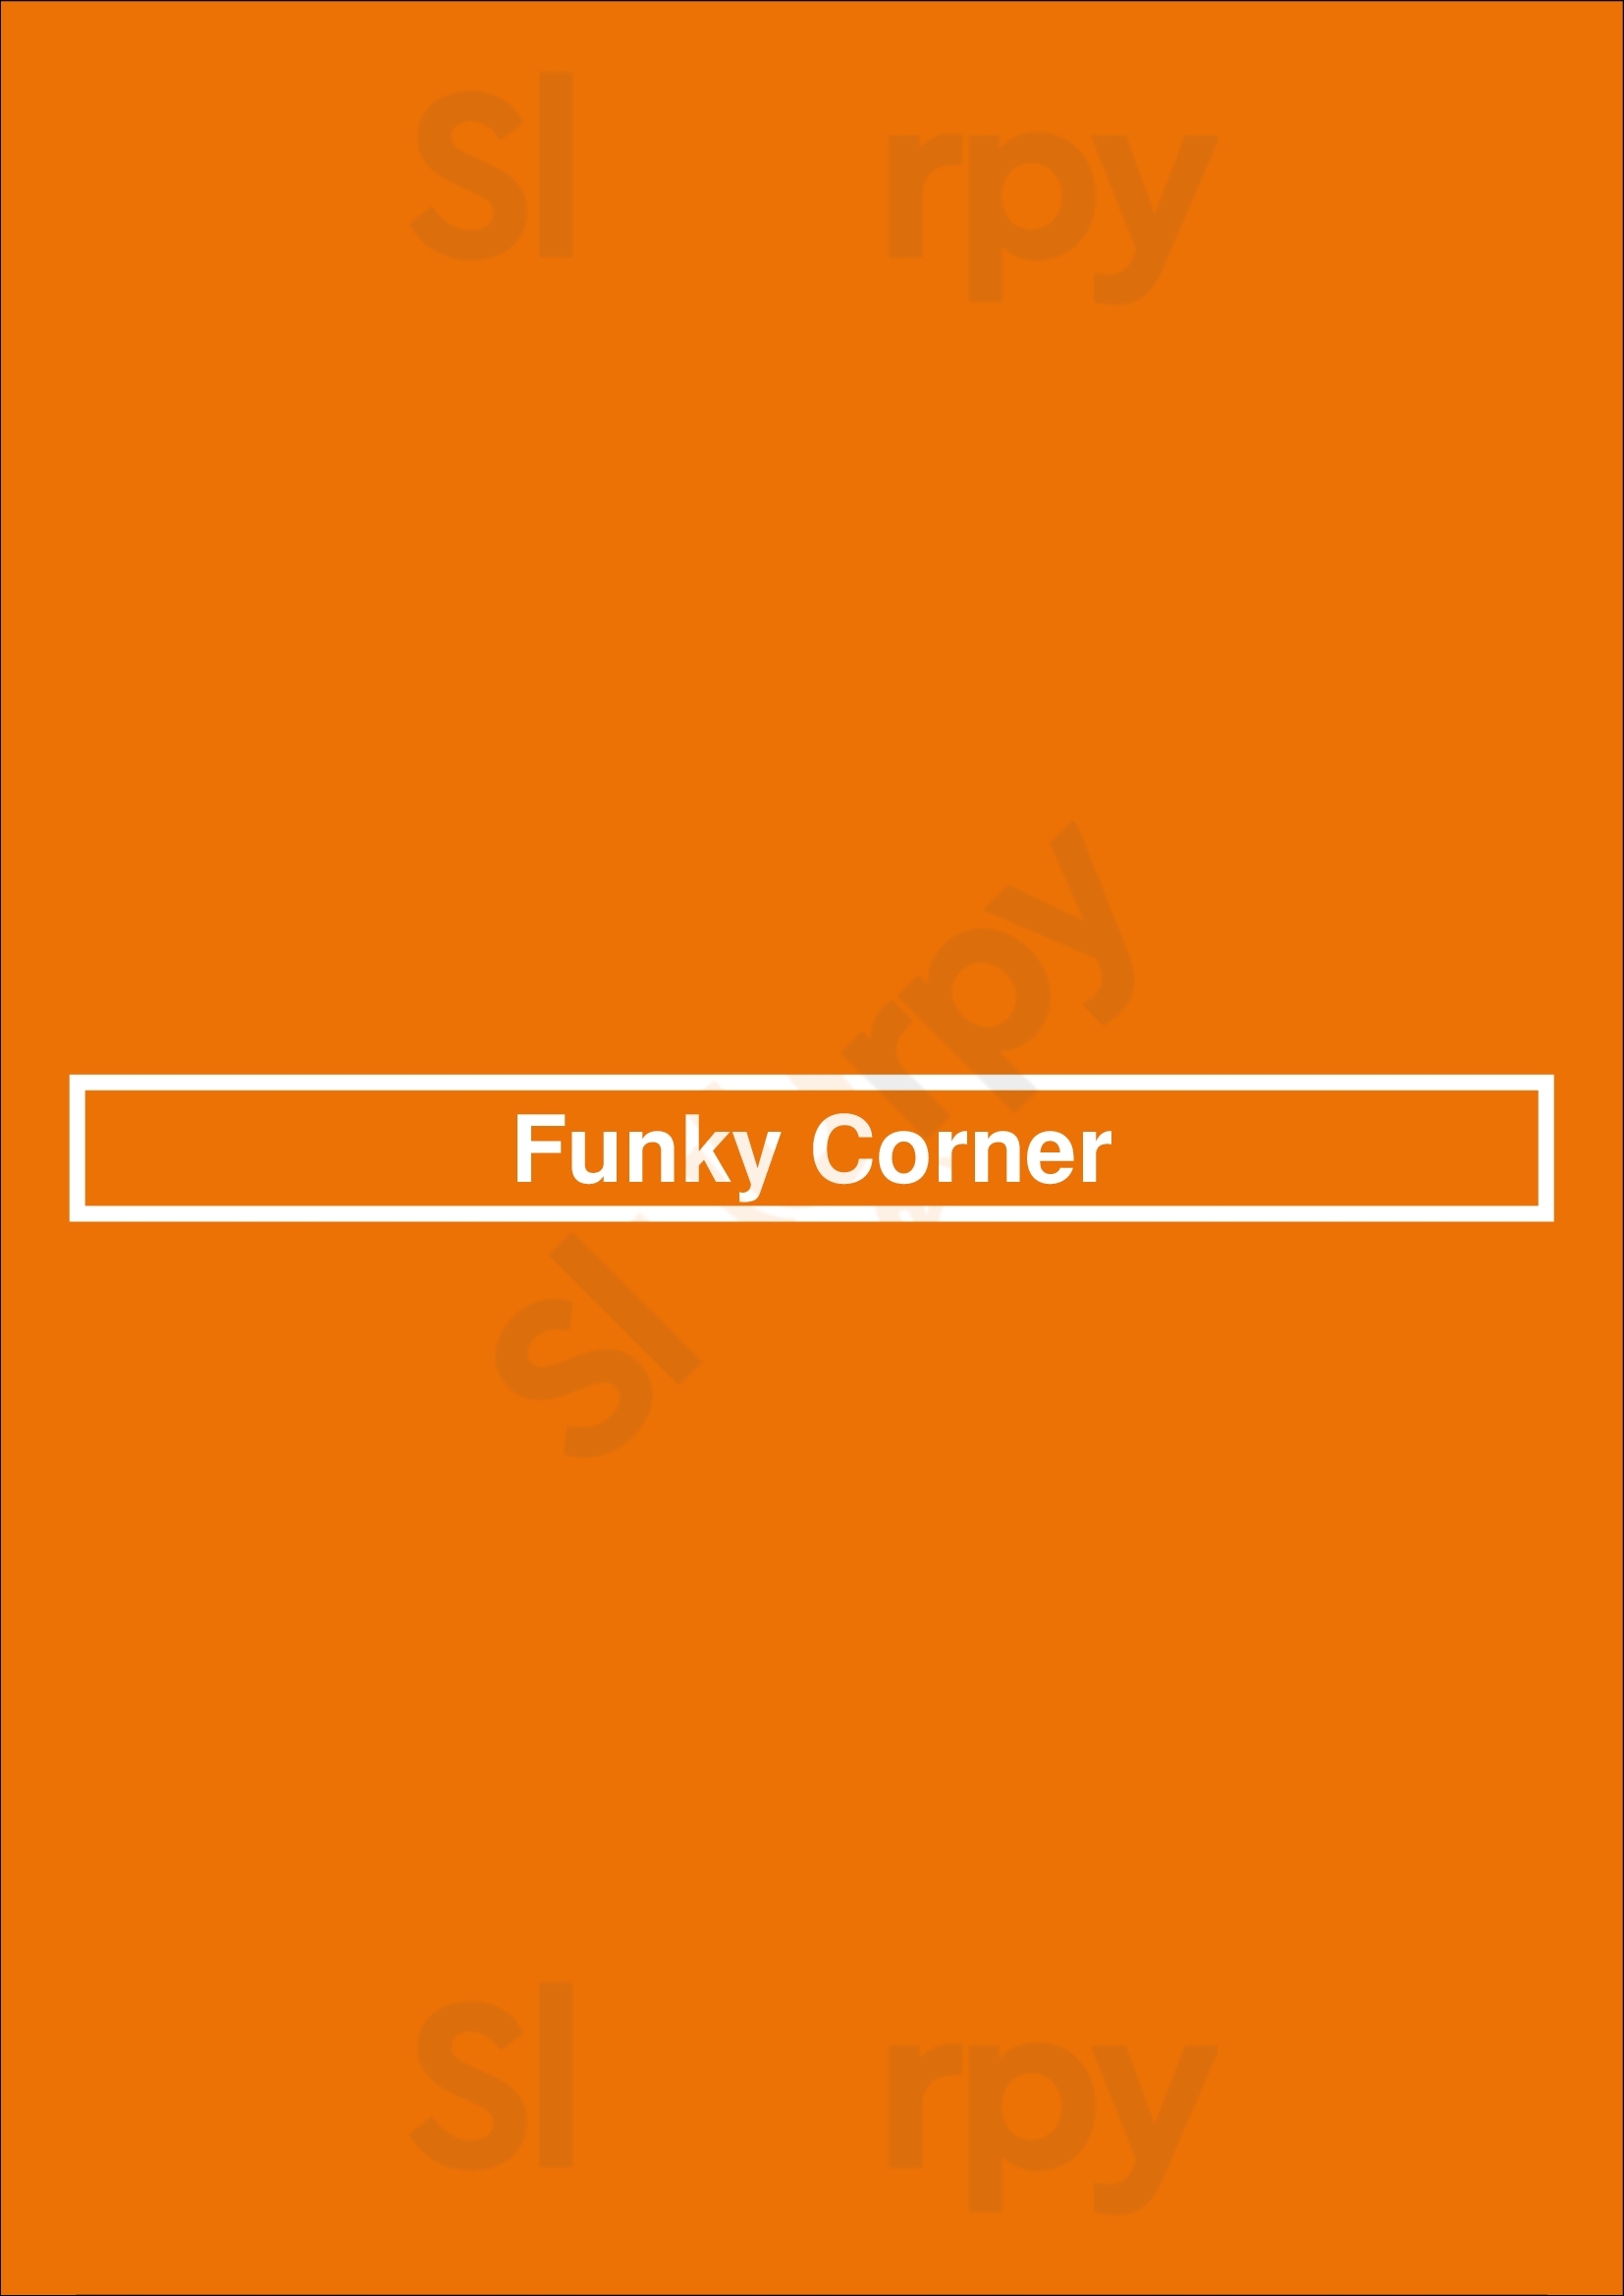 Funky Corner Barcelona Menu - 1